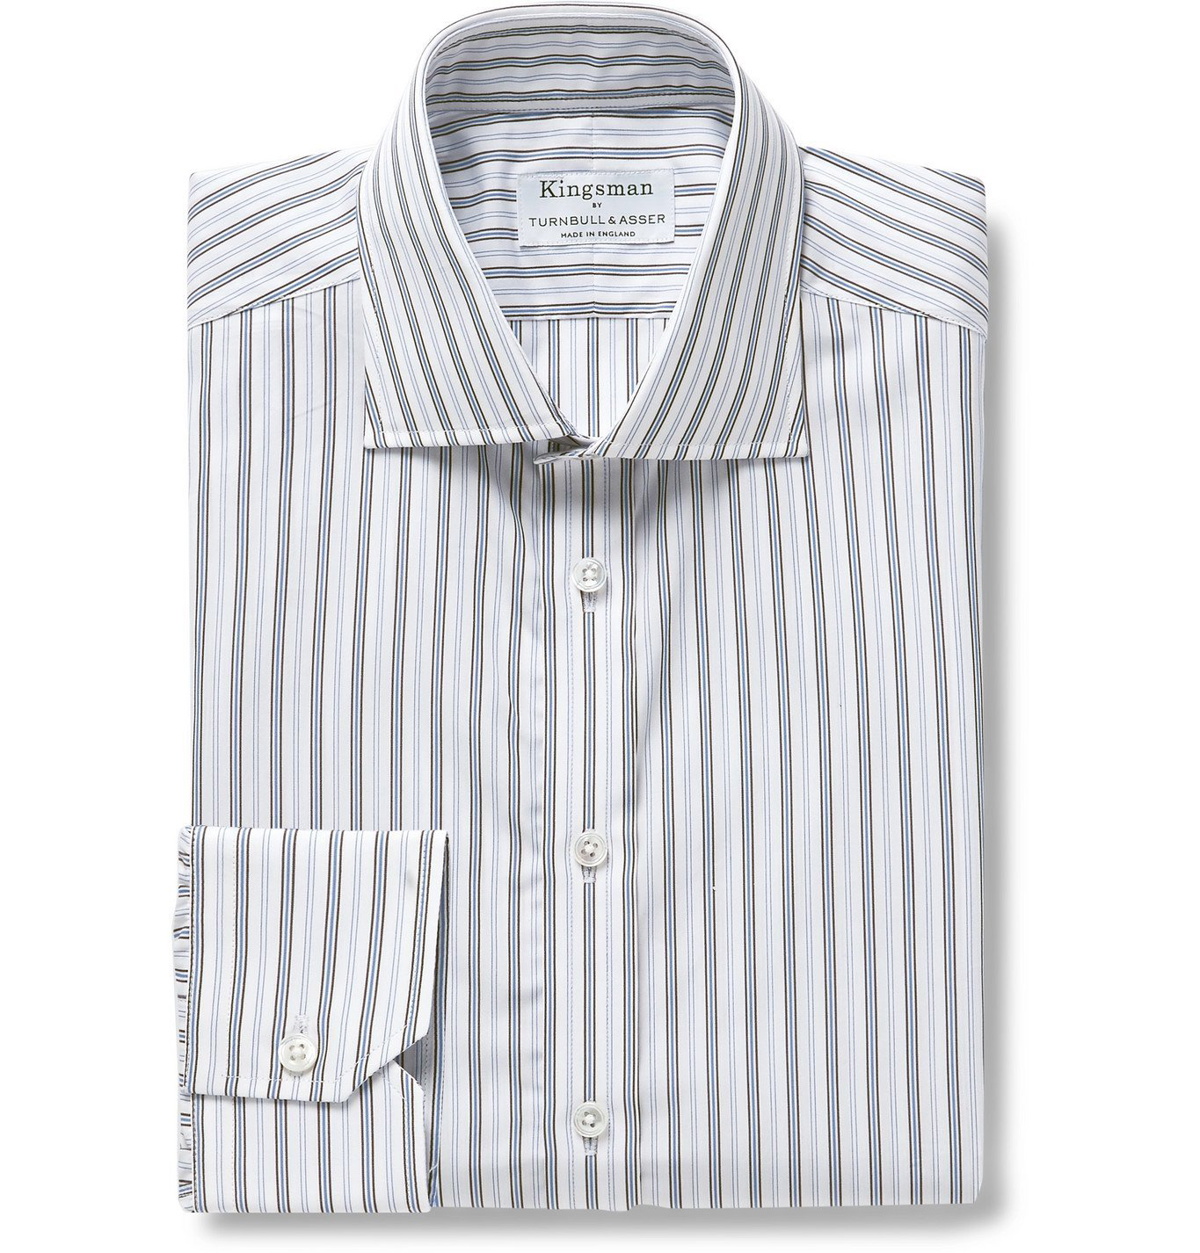 Cotton Shirt with Cutaway Collar